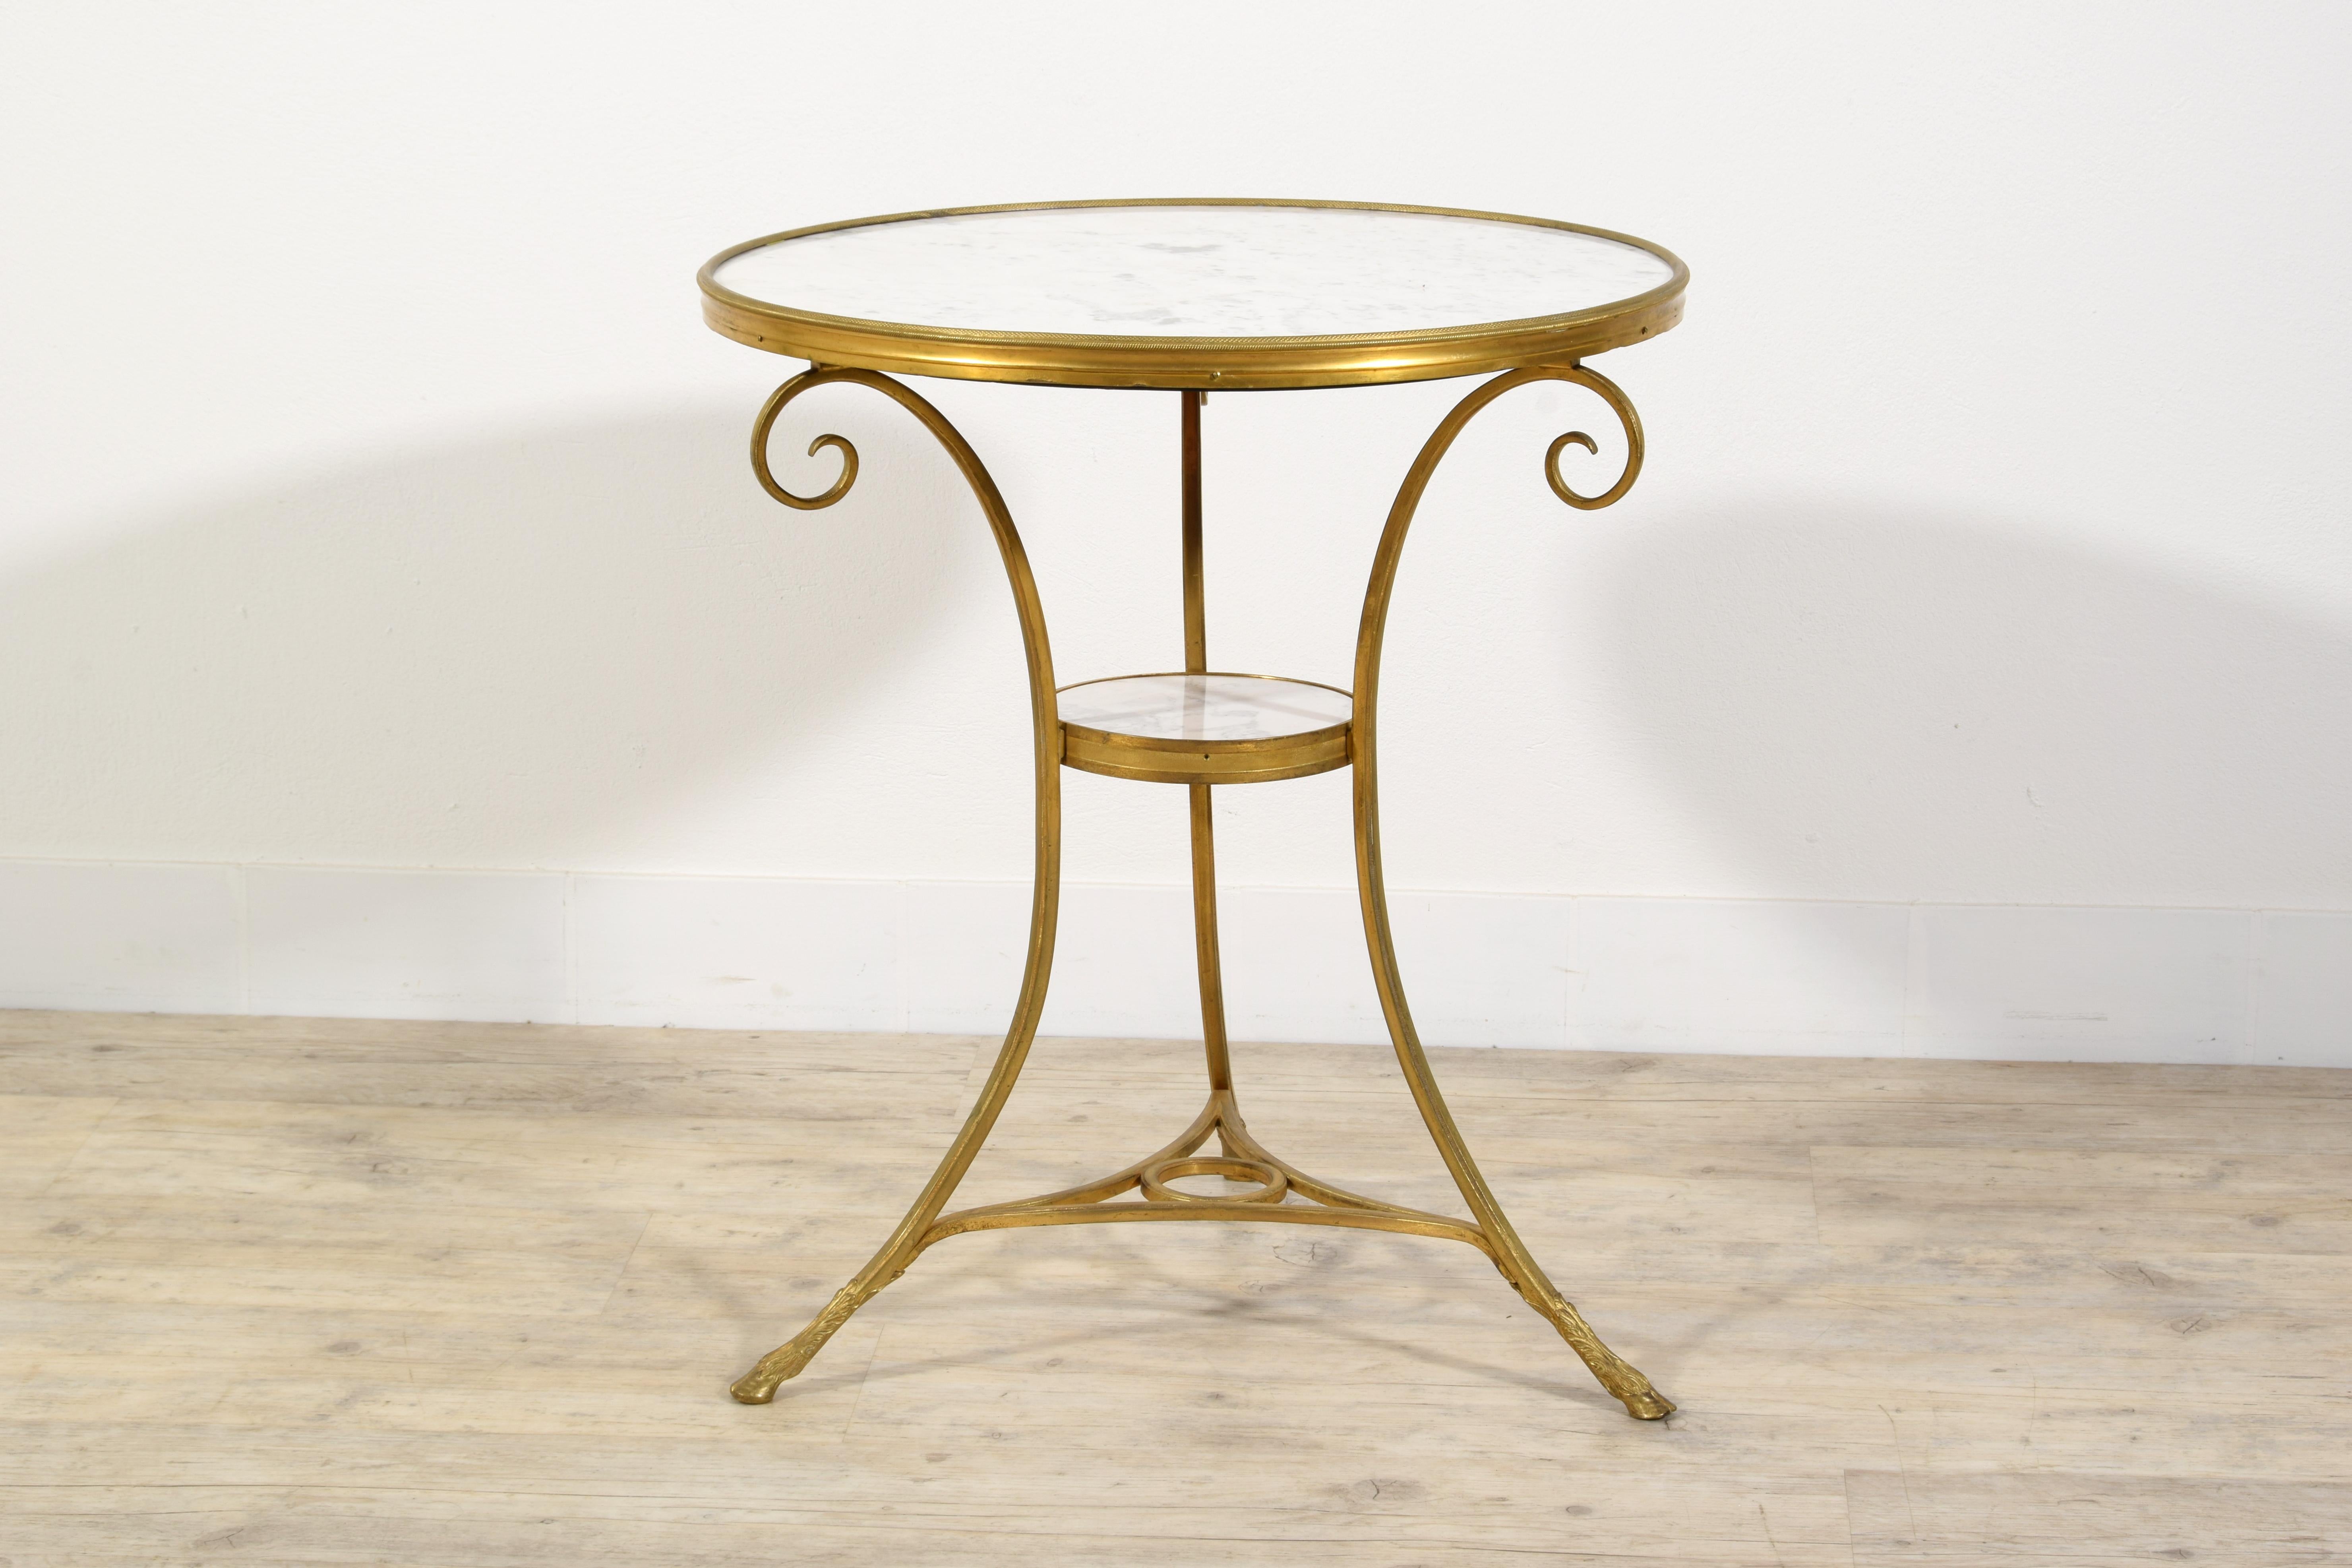 19th Century, Louis XVI Style French Gilt Bronze Tripod Coffee Table or Guéridon For Sale 3